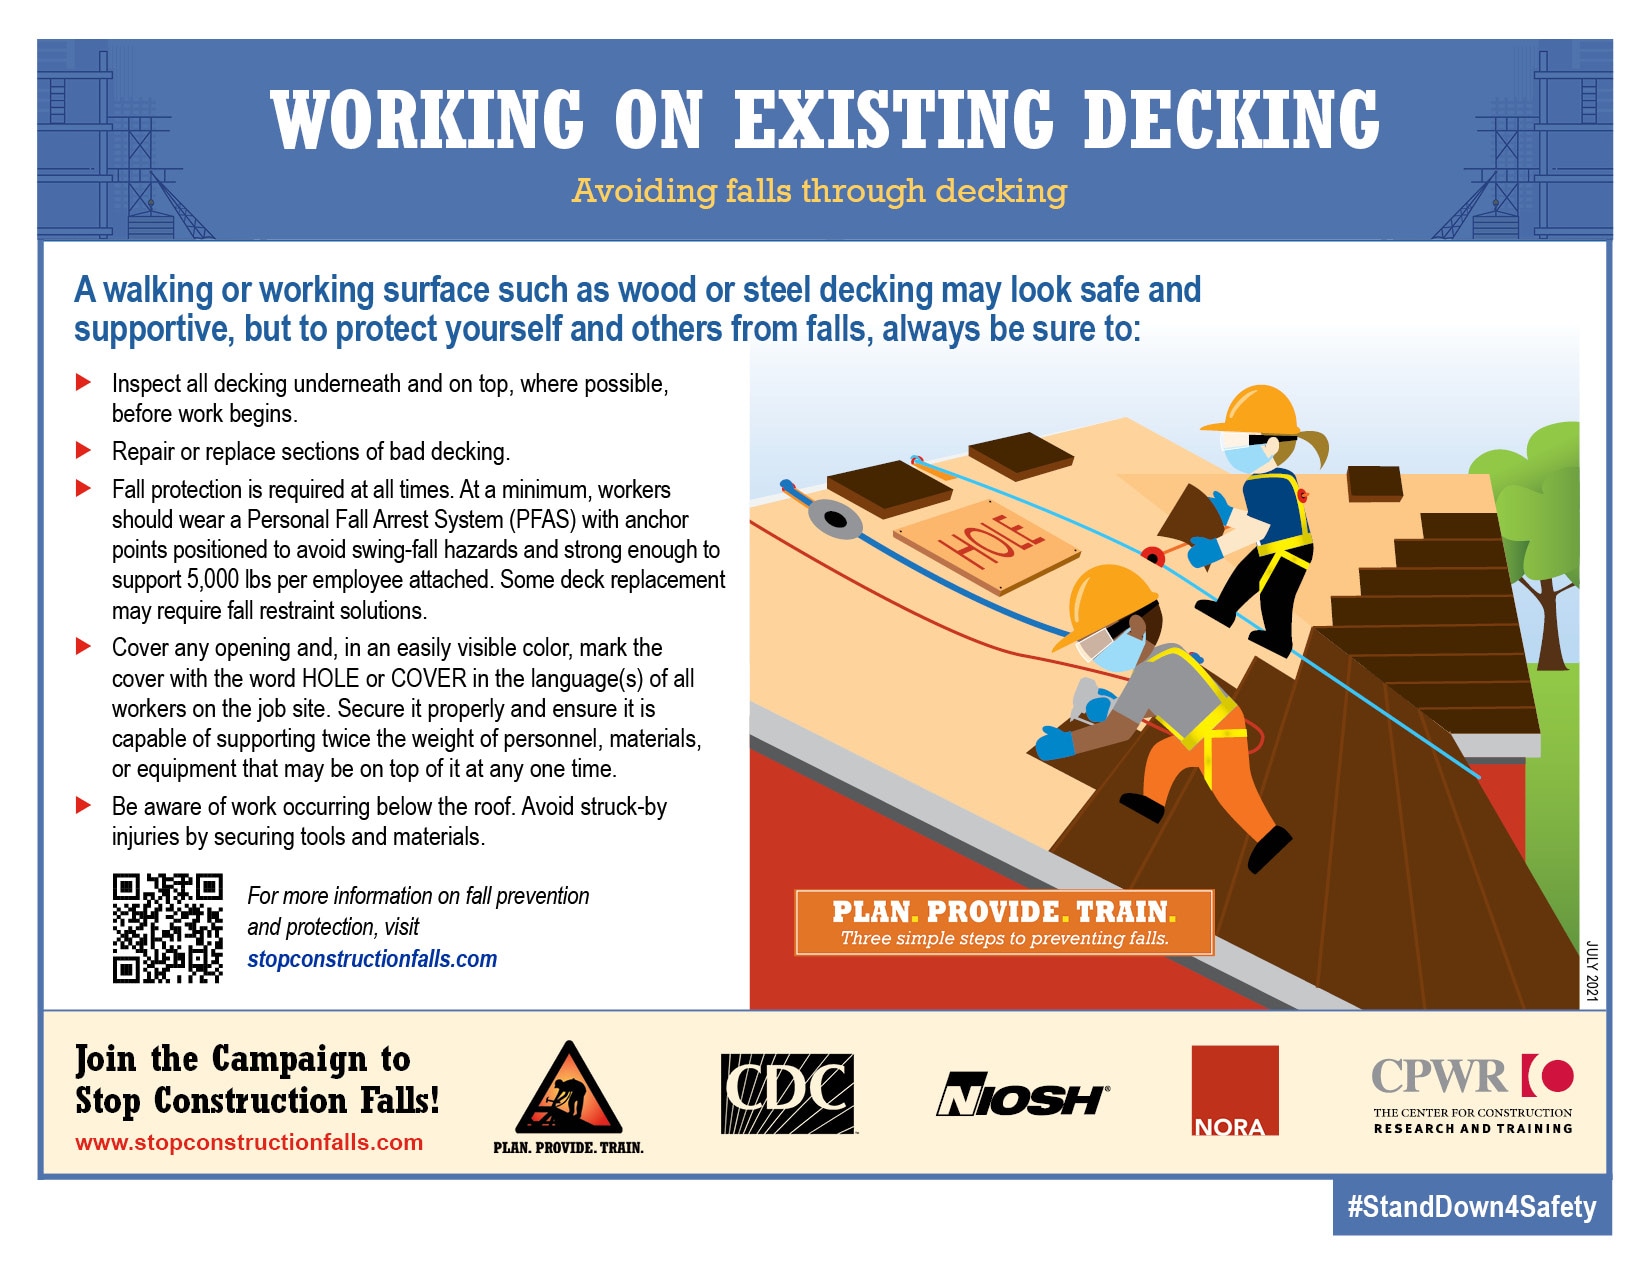 Working On Existing Decking Avoiding fall through decking